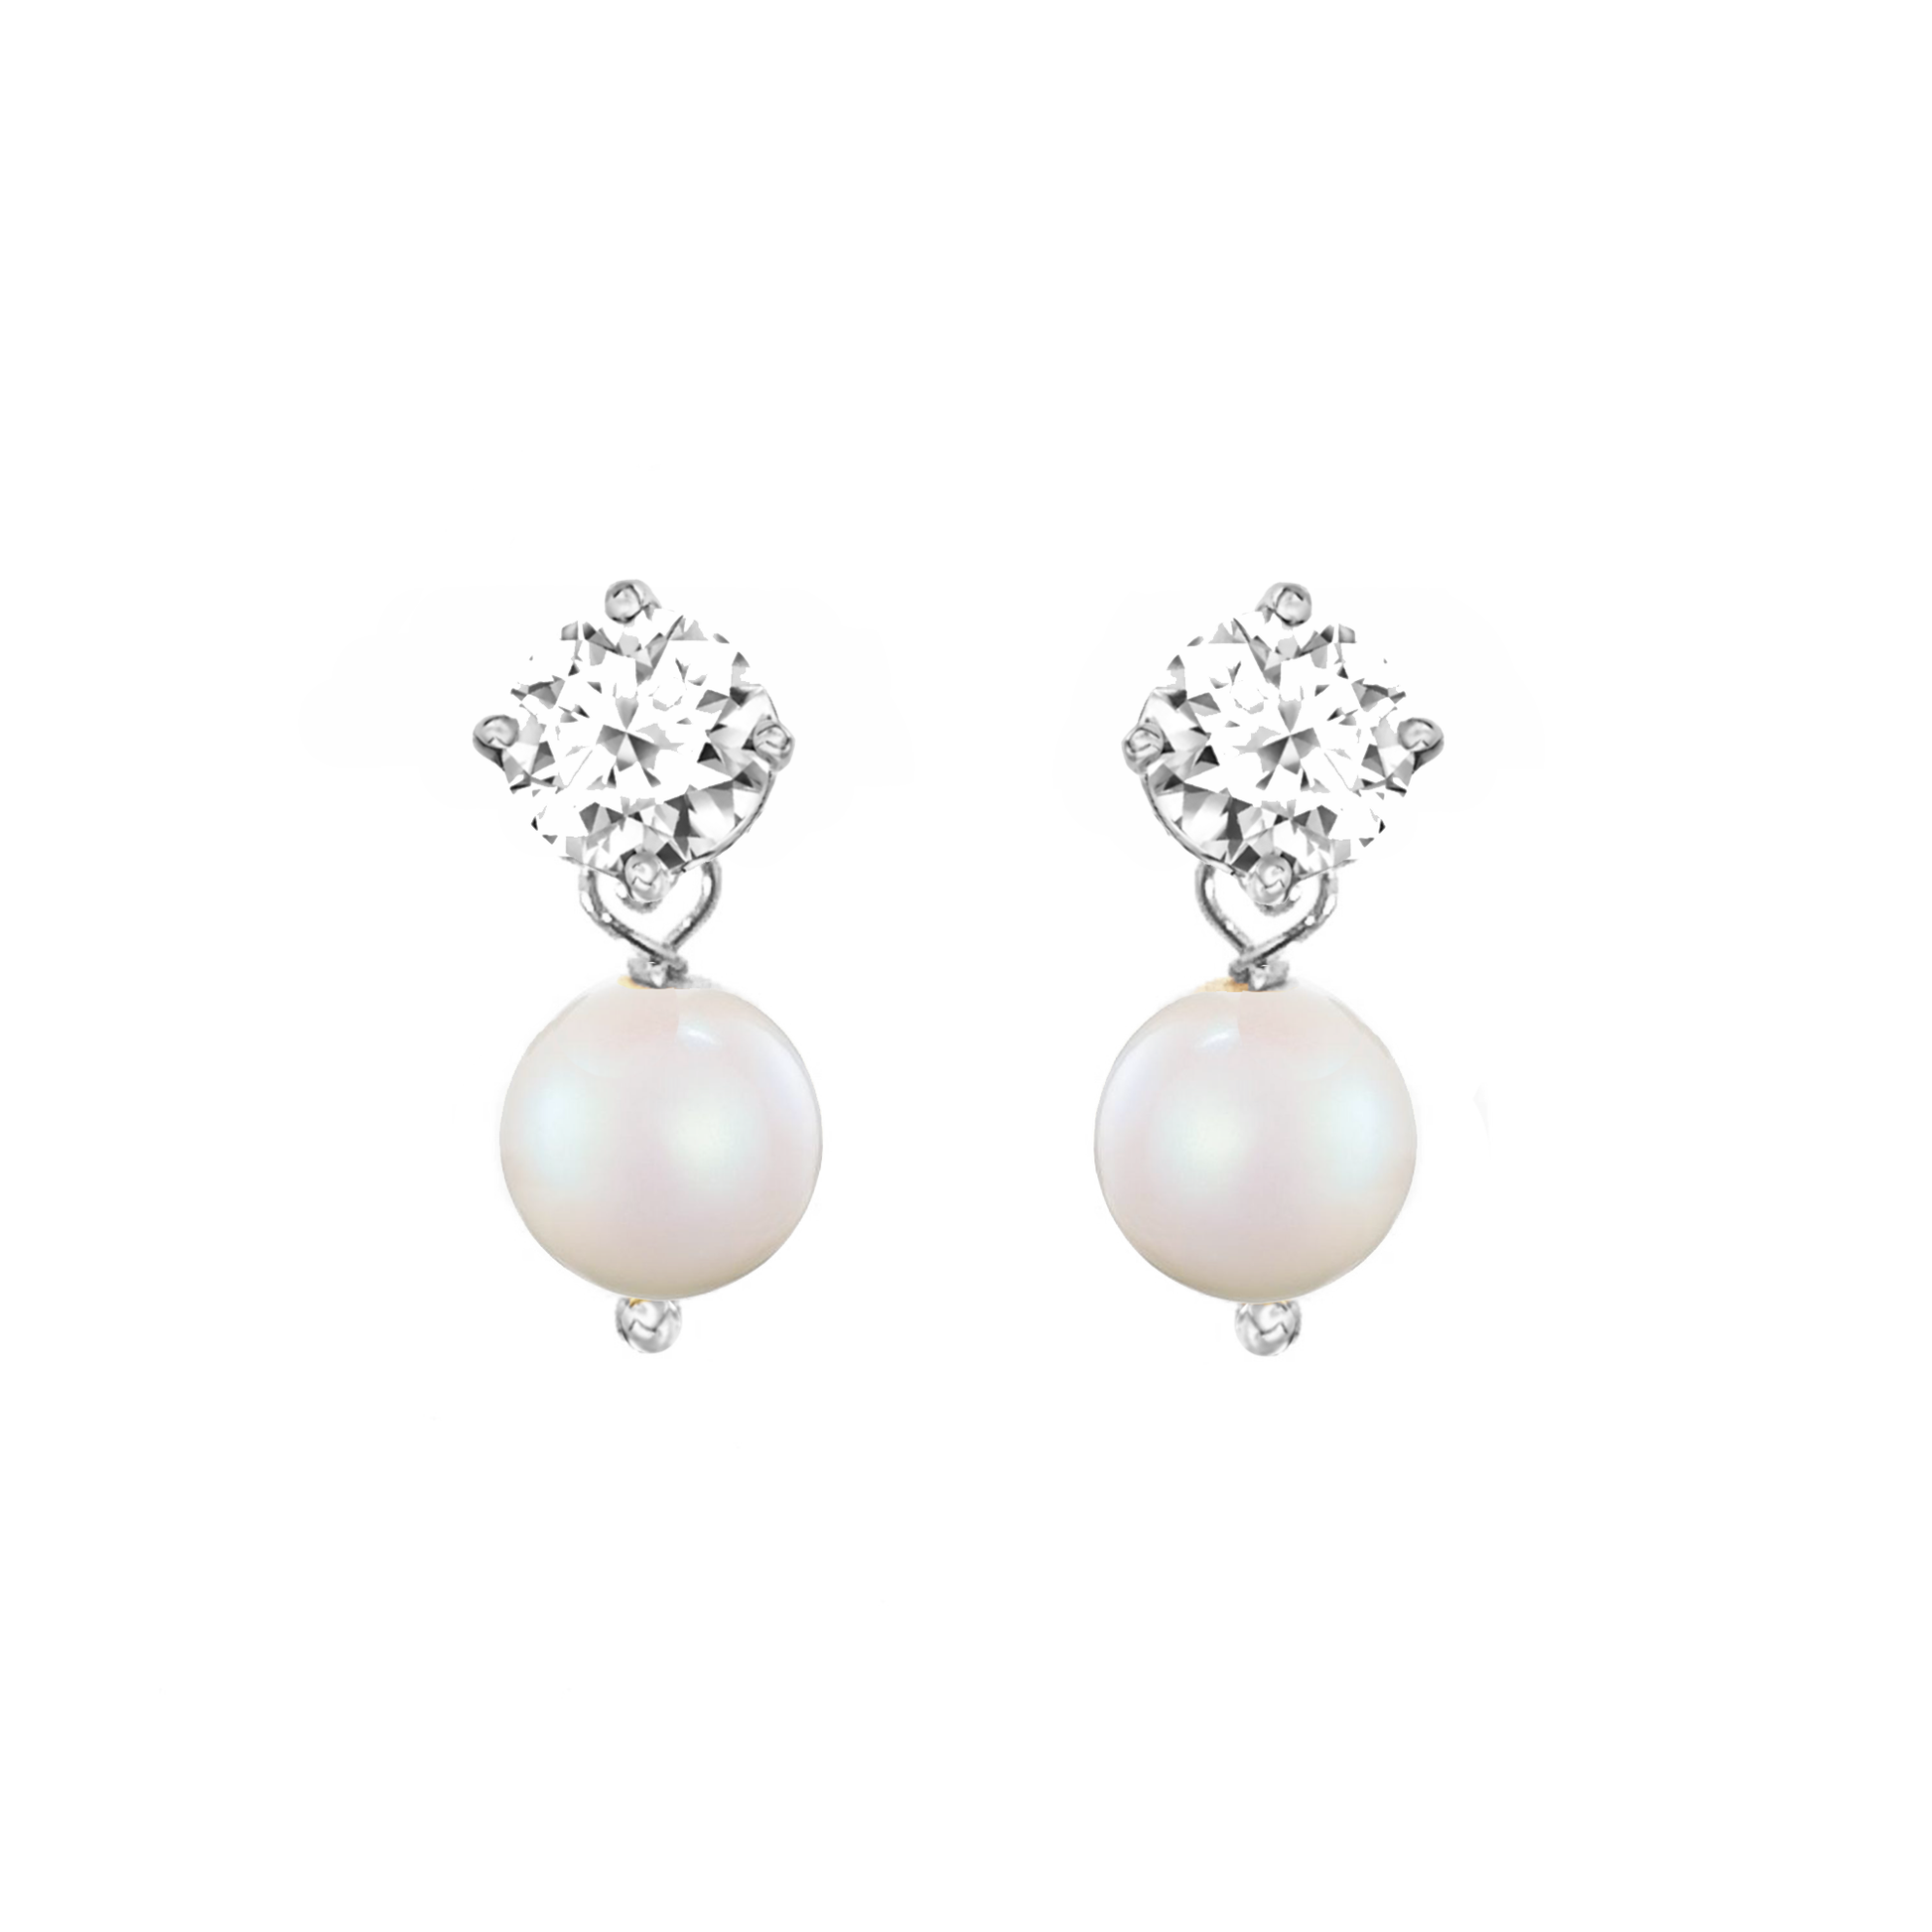 Paris pearl drop earrings silver